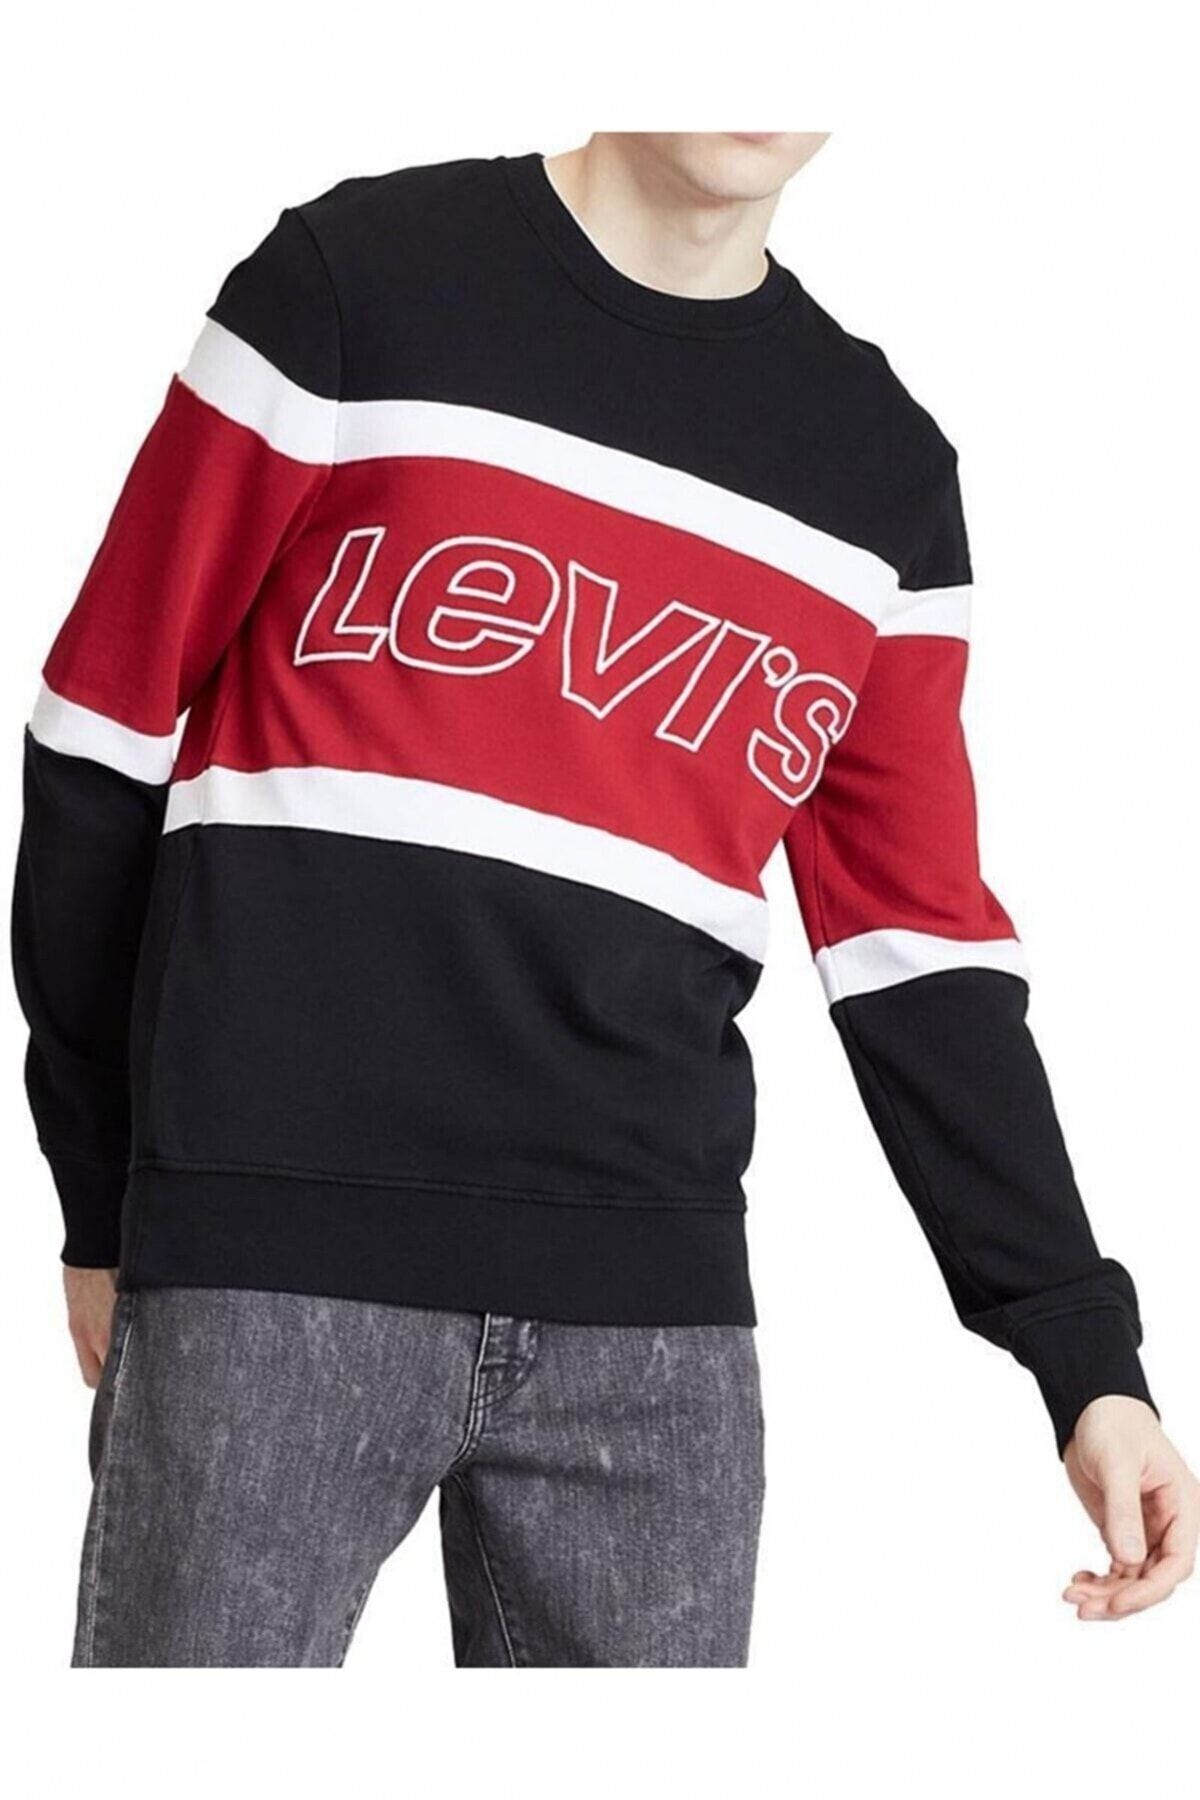 Levi's Erkek Sweatshirt 79550-0000